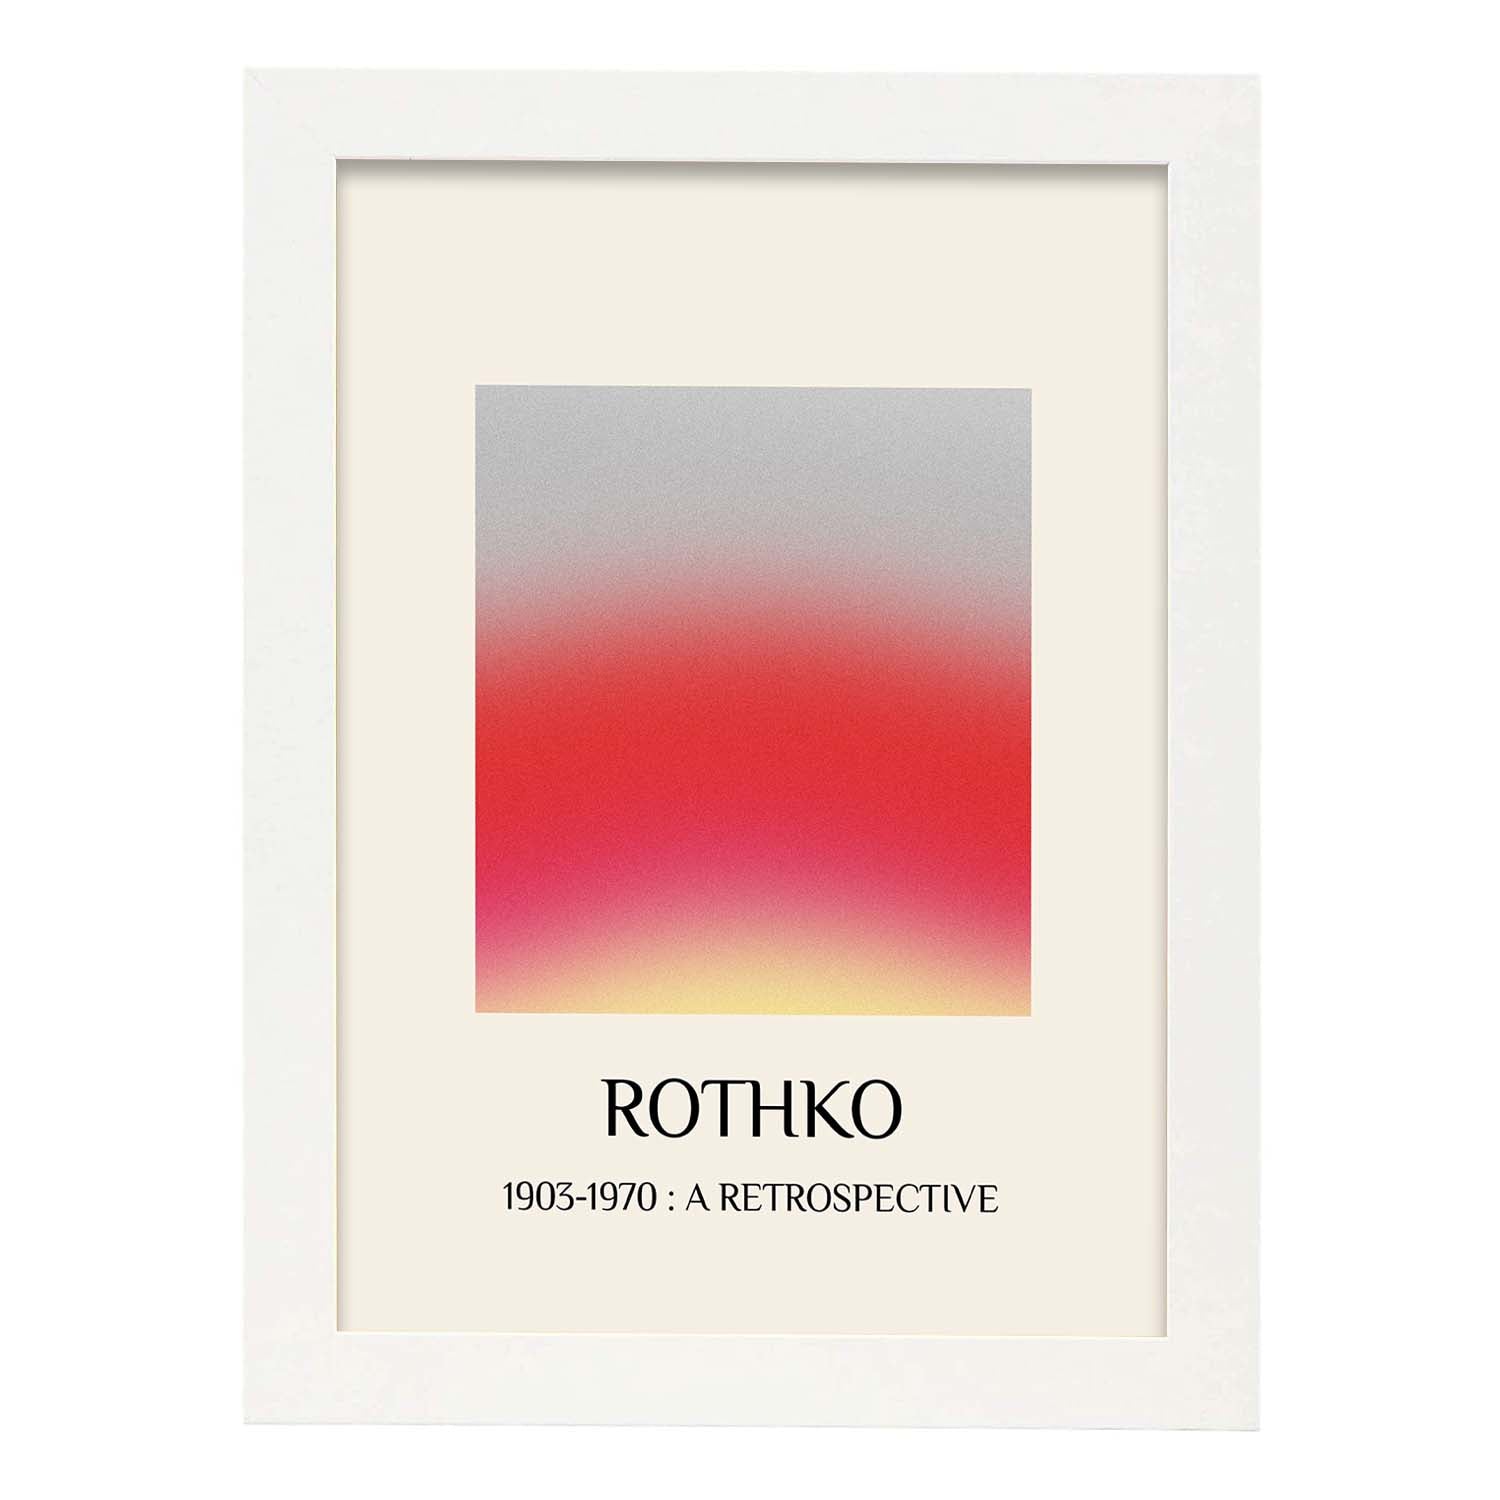 Lamina artistica decorativa con ilustración de Exposición Rothko 5 estilo expresionismo abstracto-Artwork-Nacnic-A4-Marco Blanco-Nacnic Estudio SL